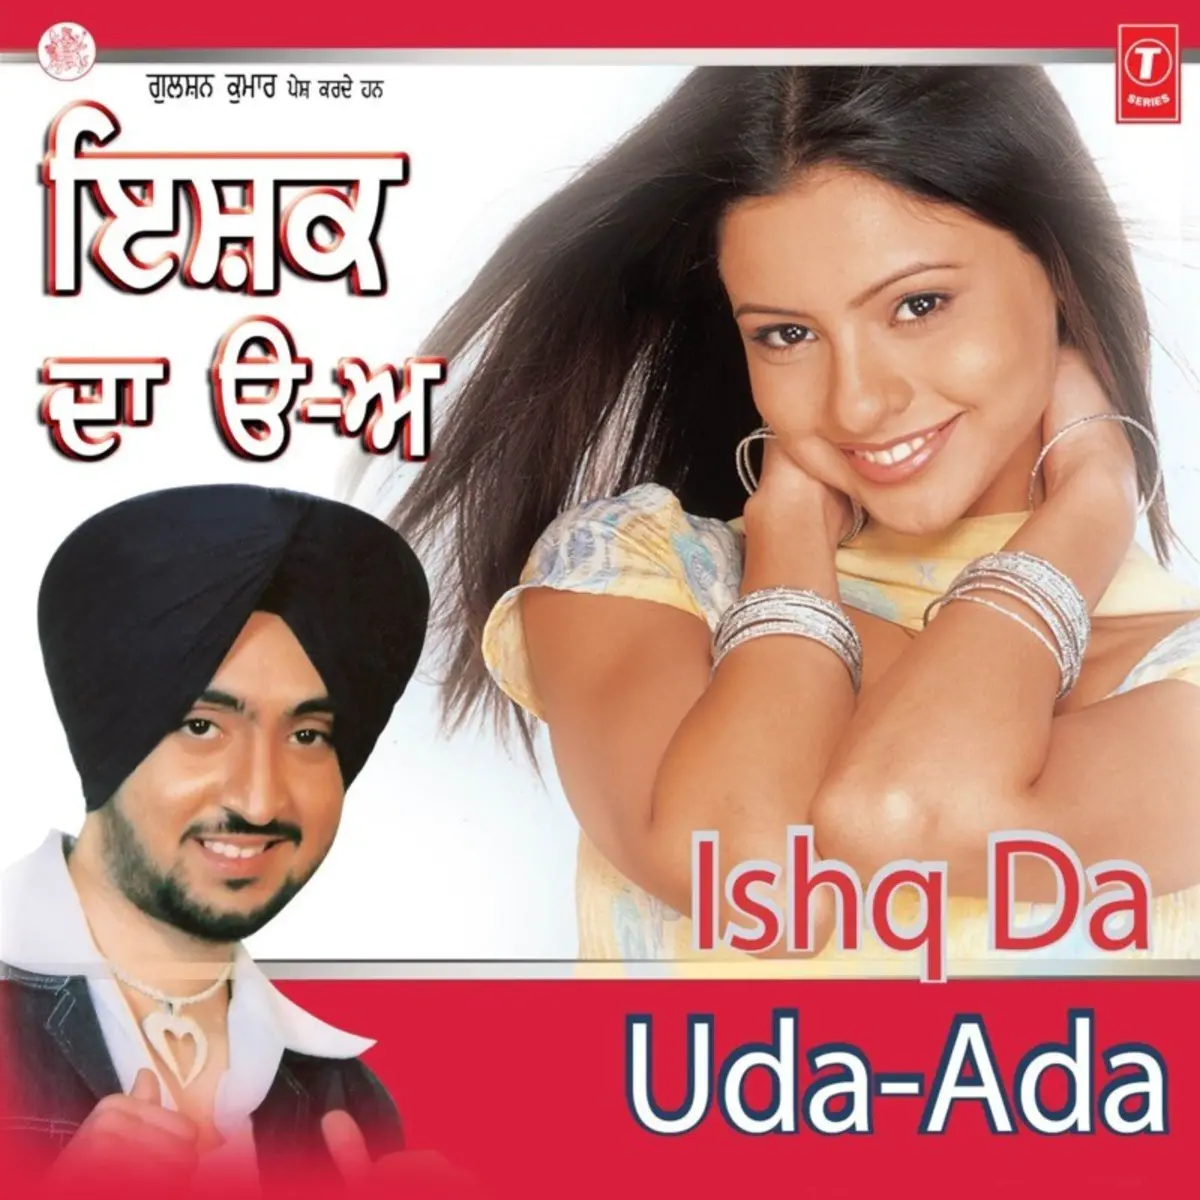 Ishq Da Uda Ada Songs Download: Ishq Da Uda Ada MP3 Punjabi Songs Online  Free on Gaana.com